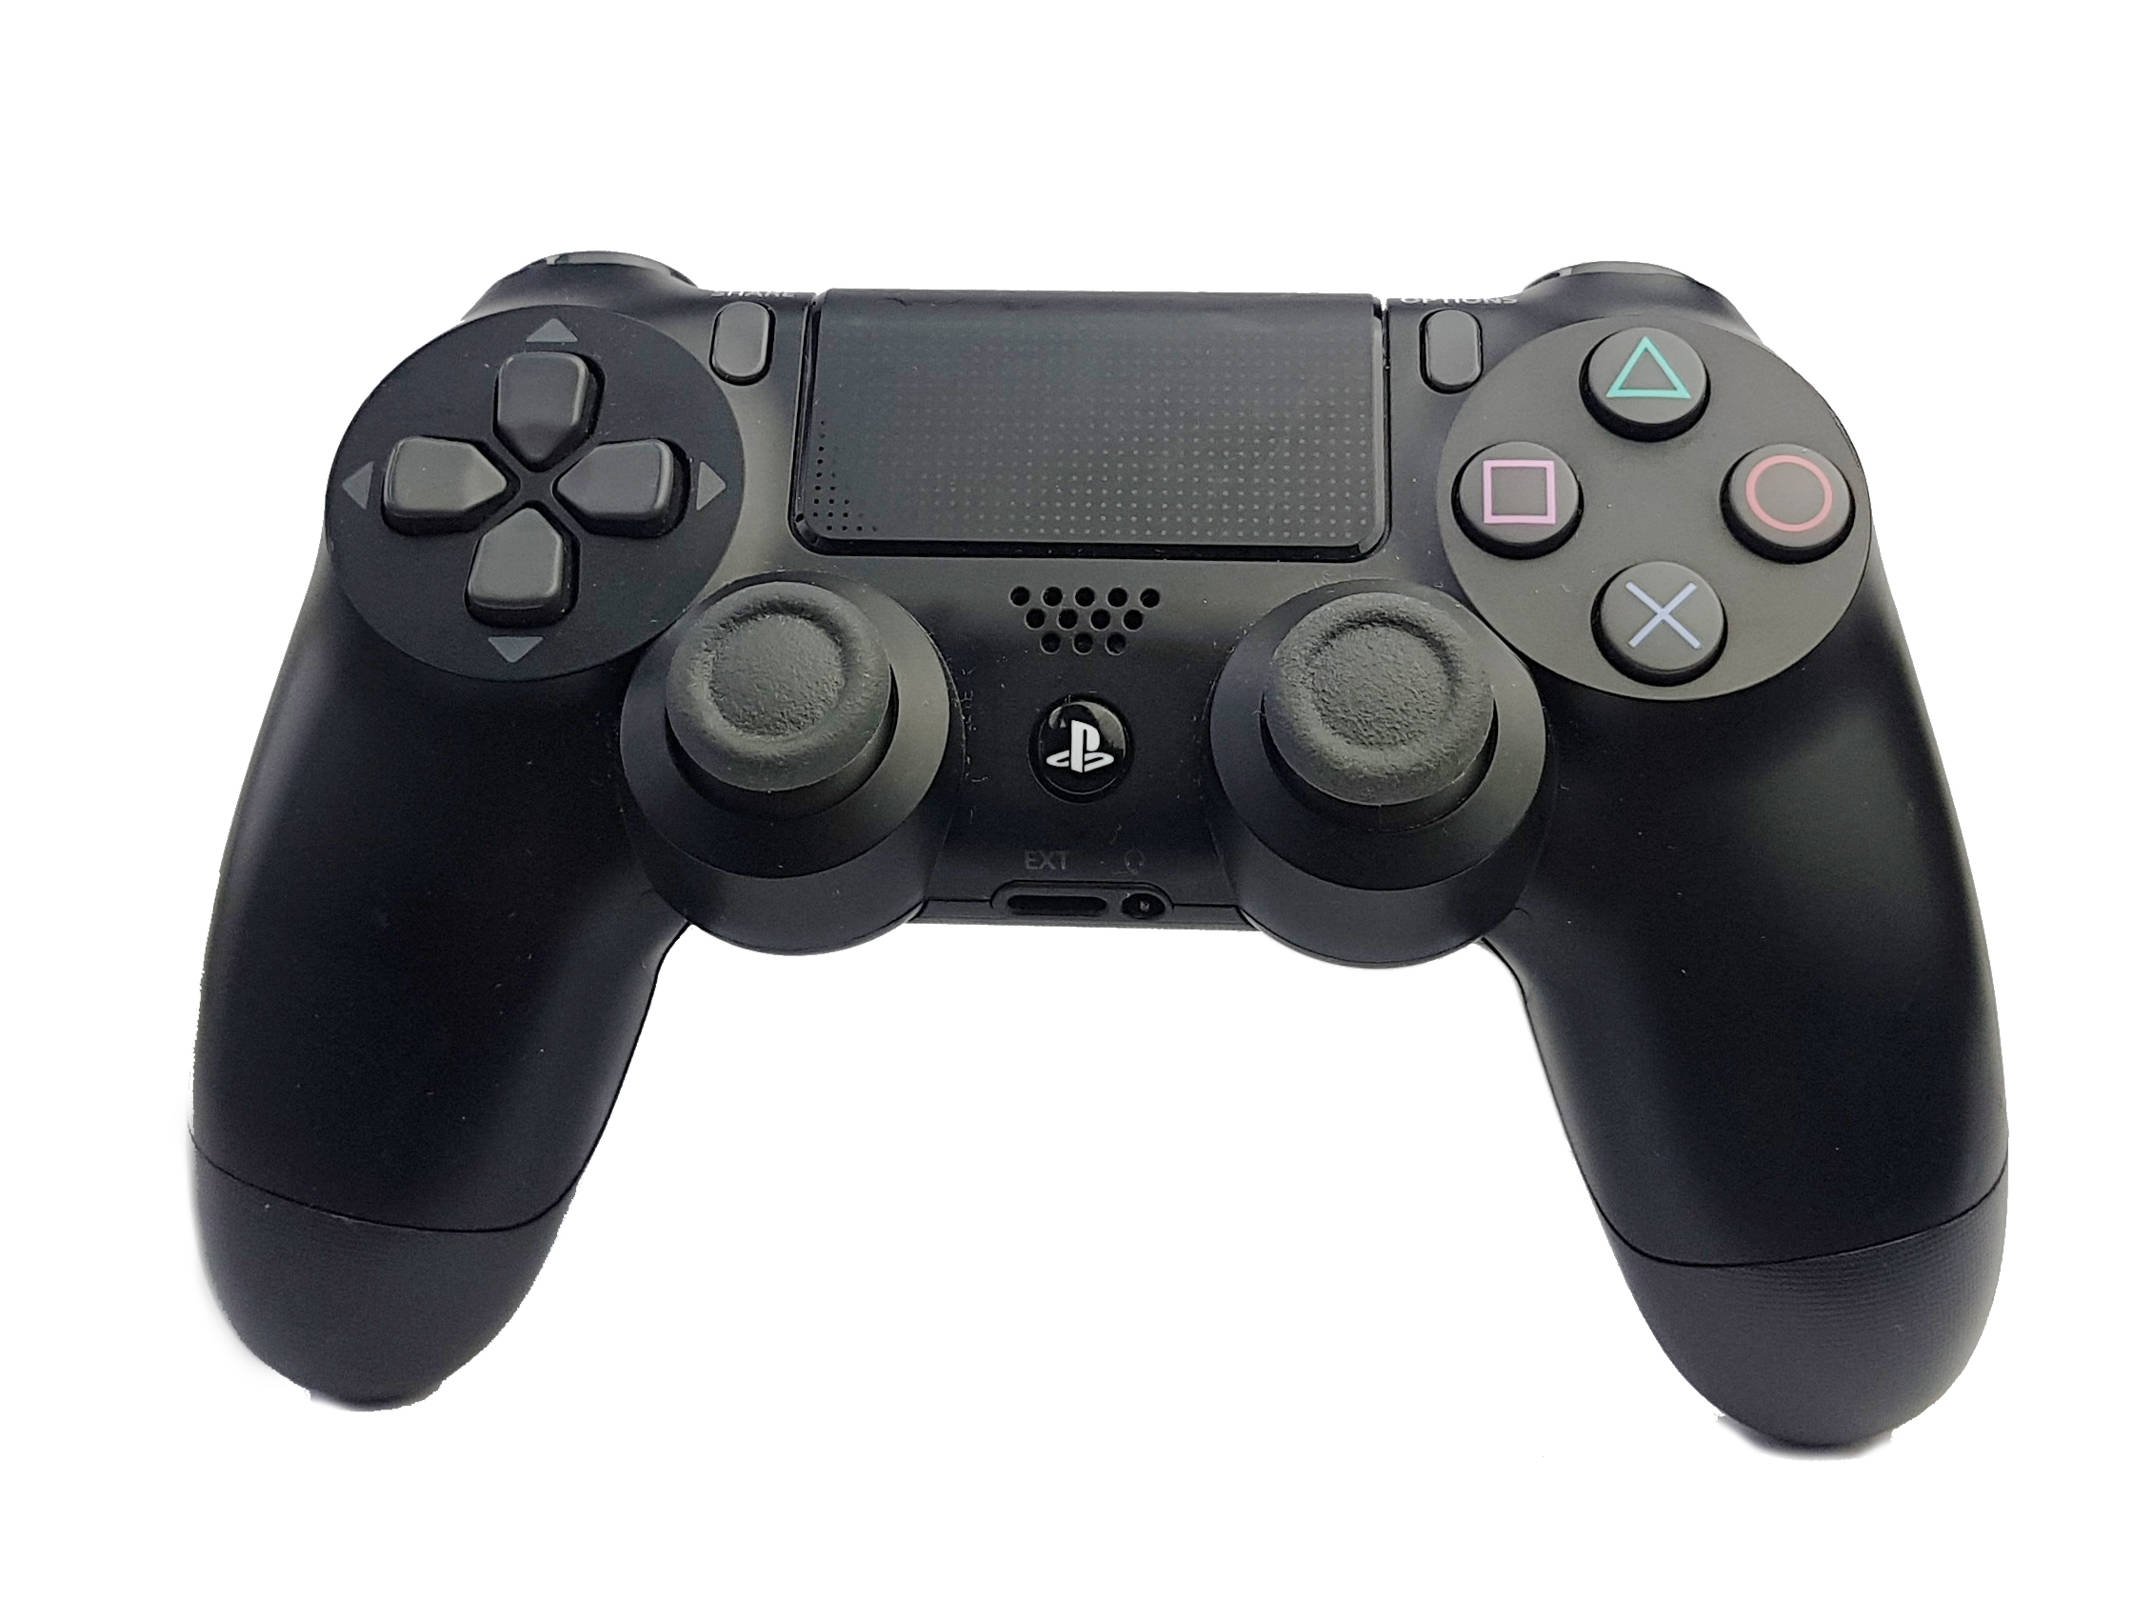 New PS4 Original Sony DualShock 4 Wireless Controller Playstation